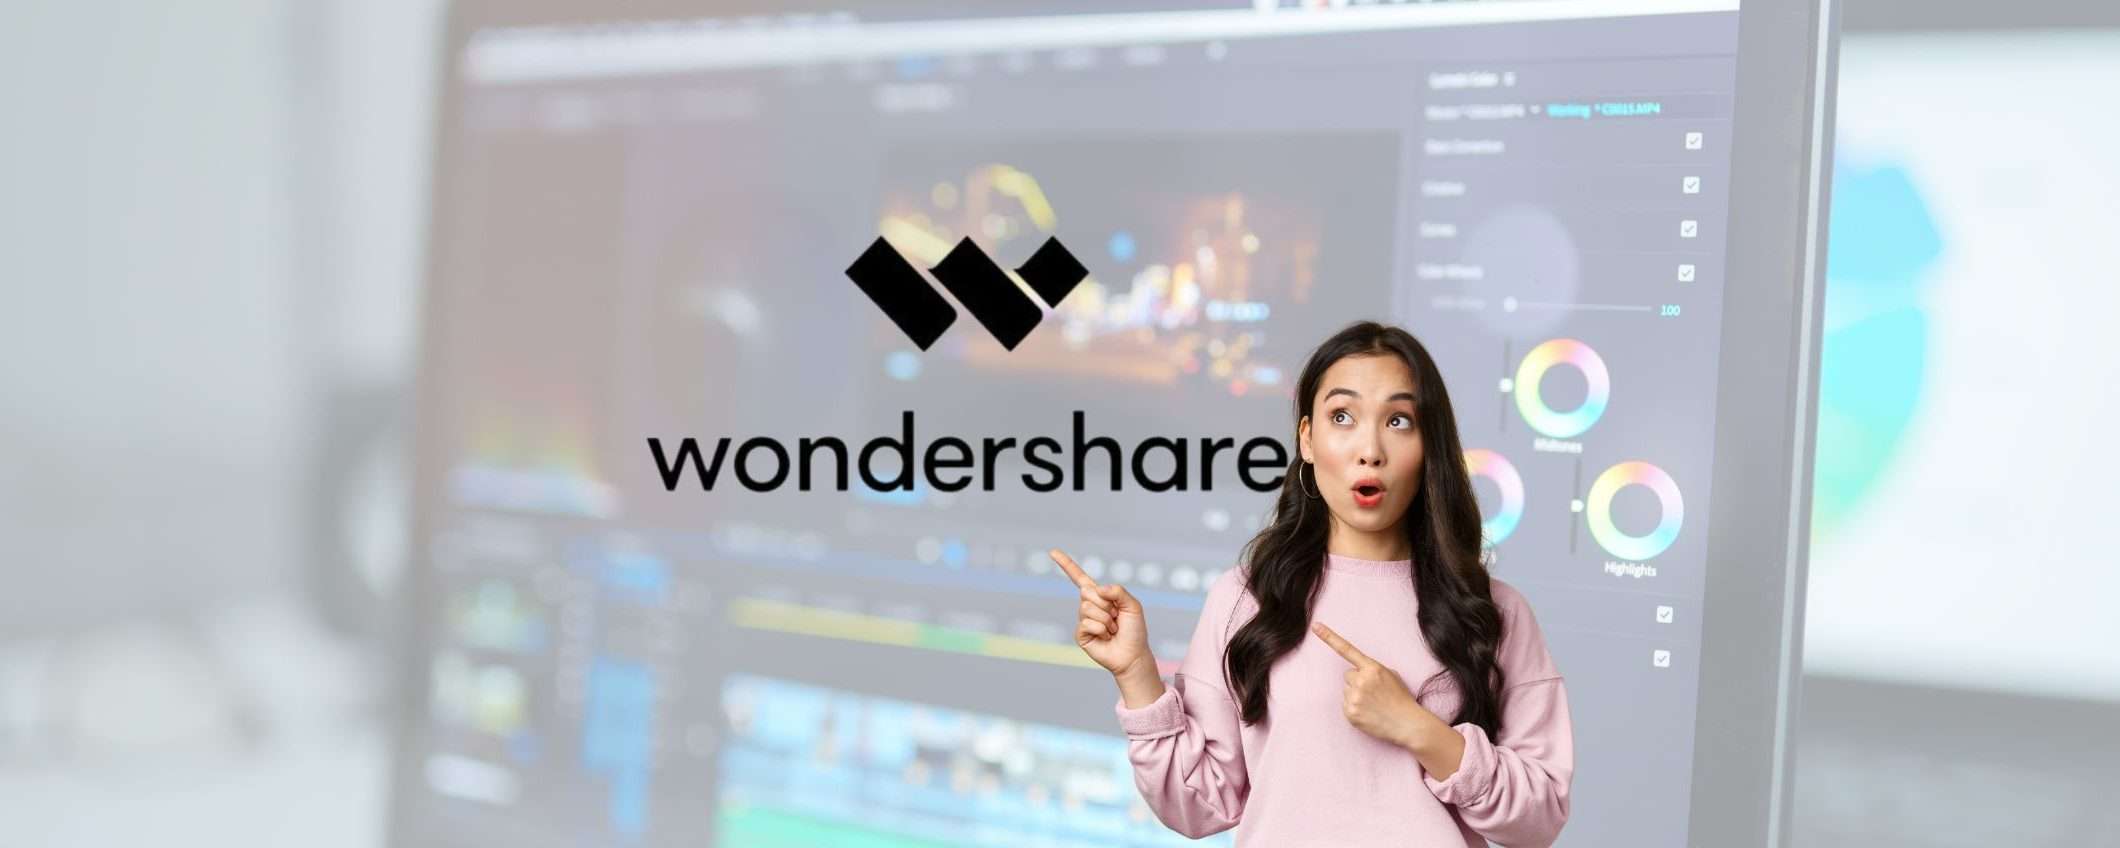 Wondershare: soluzioni AI per ogni esigenza